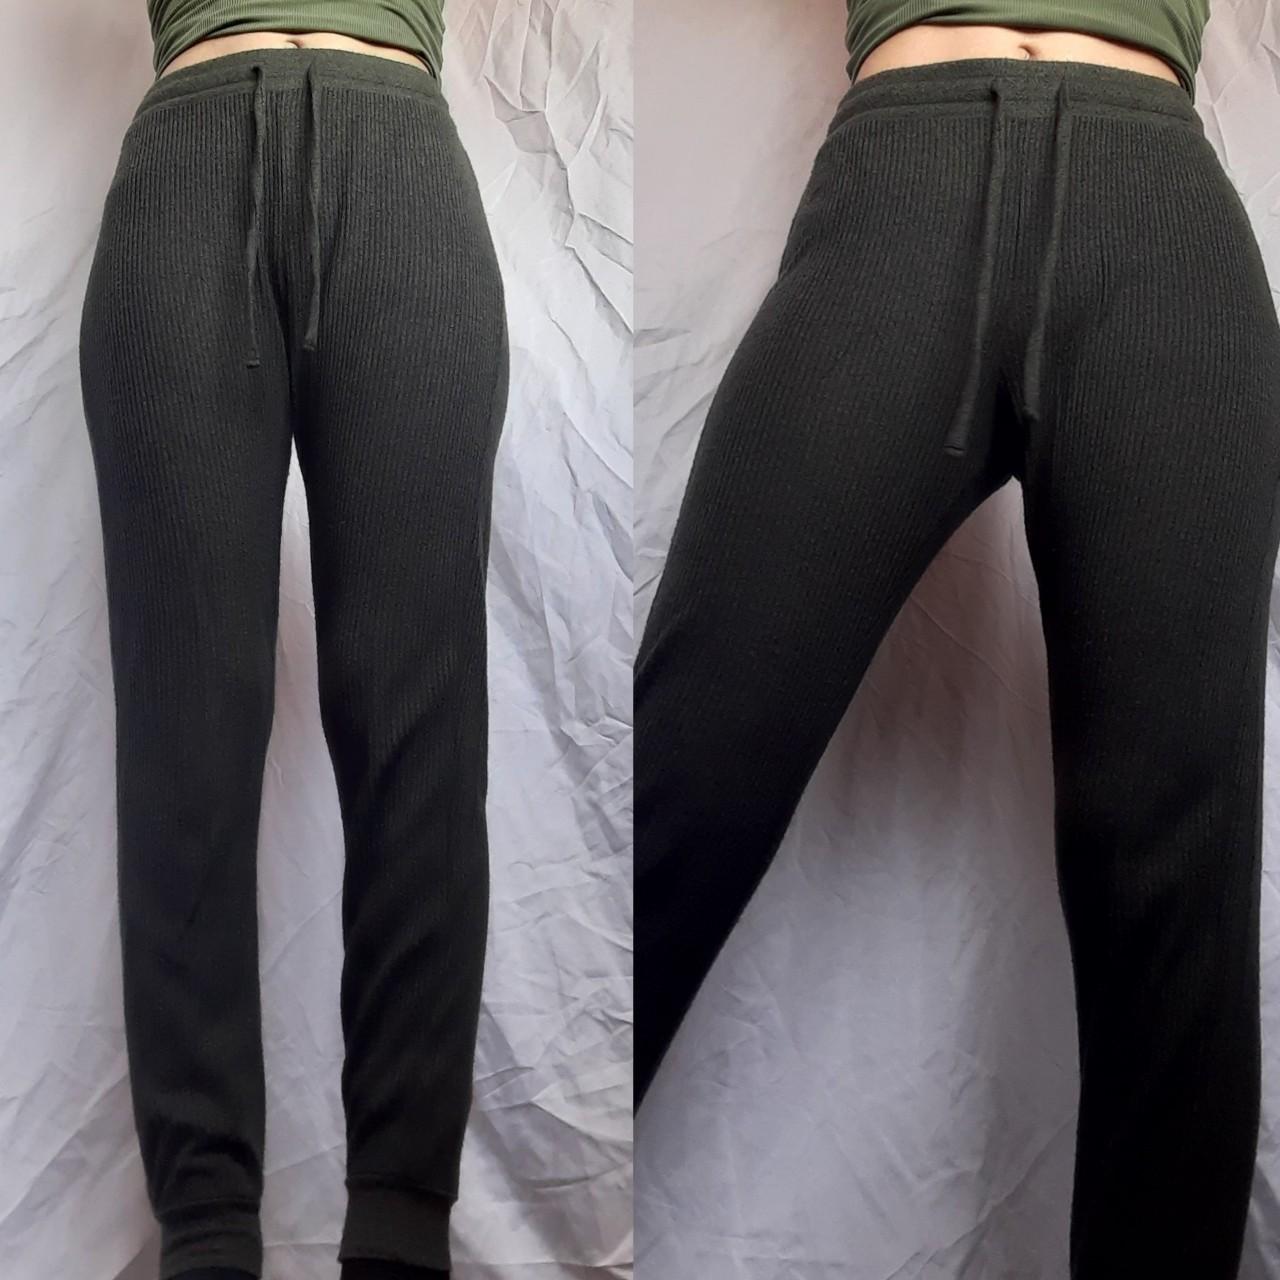 Dark Olive Green Joggers Sweatpants 🥀 Size XS, - Depop